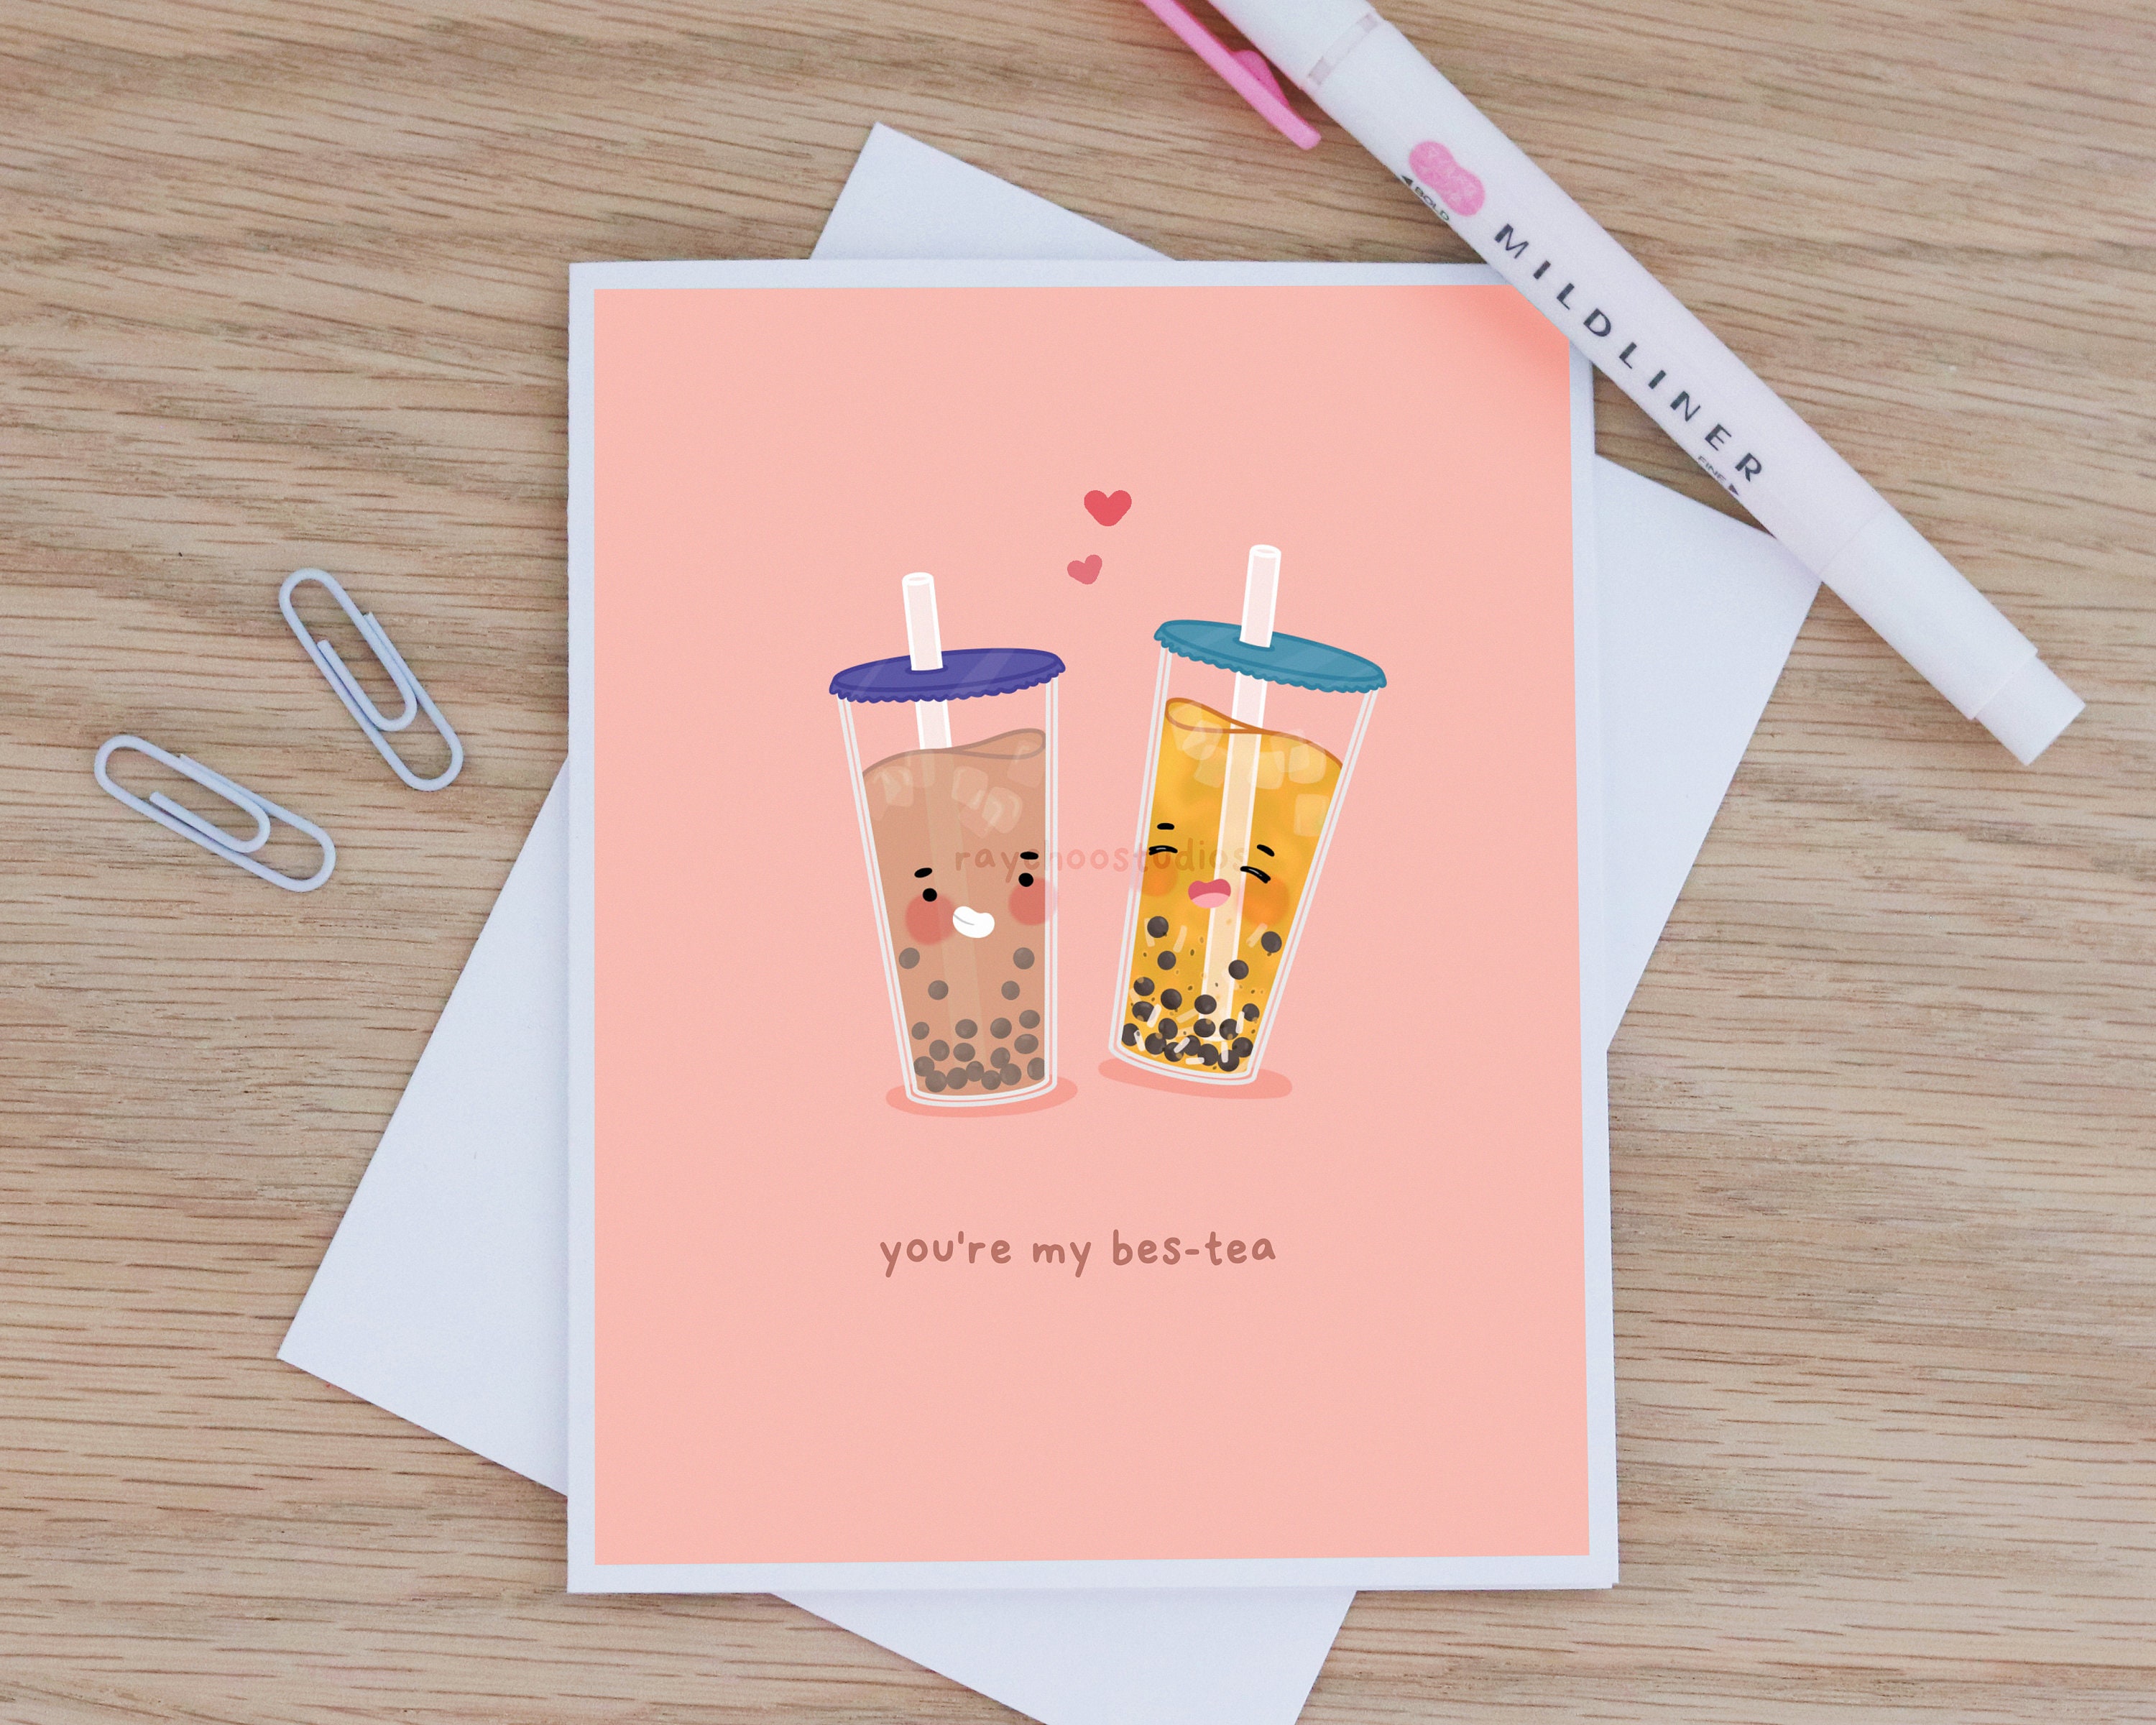 You're My Bes-tea Greeting Card Bestea Best Friend - Etsy